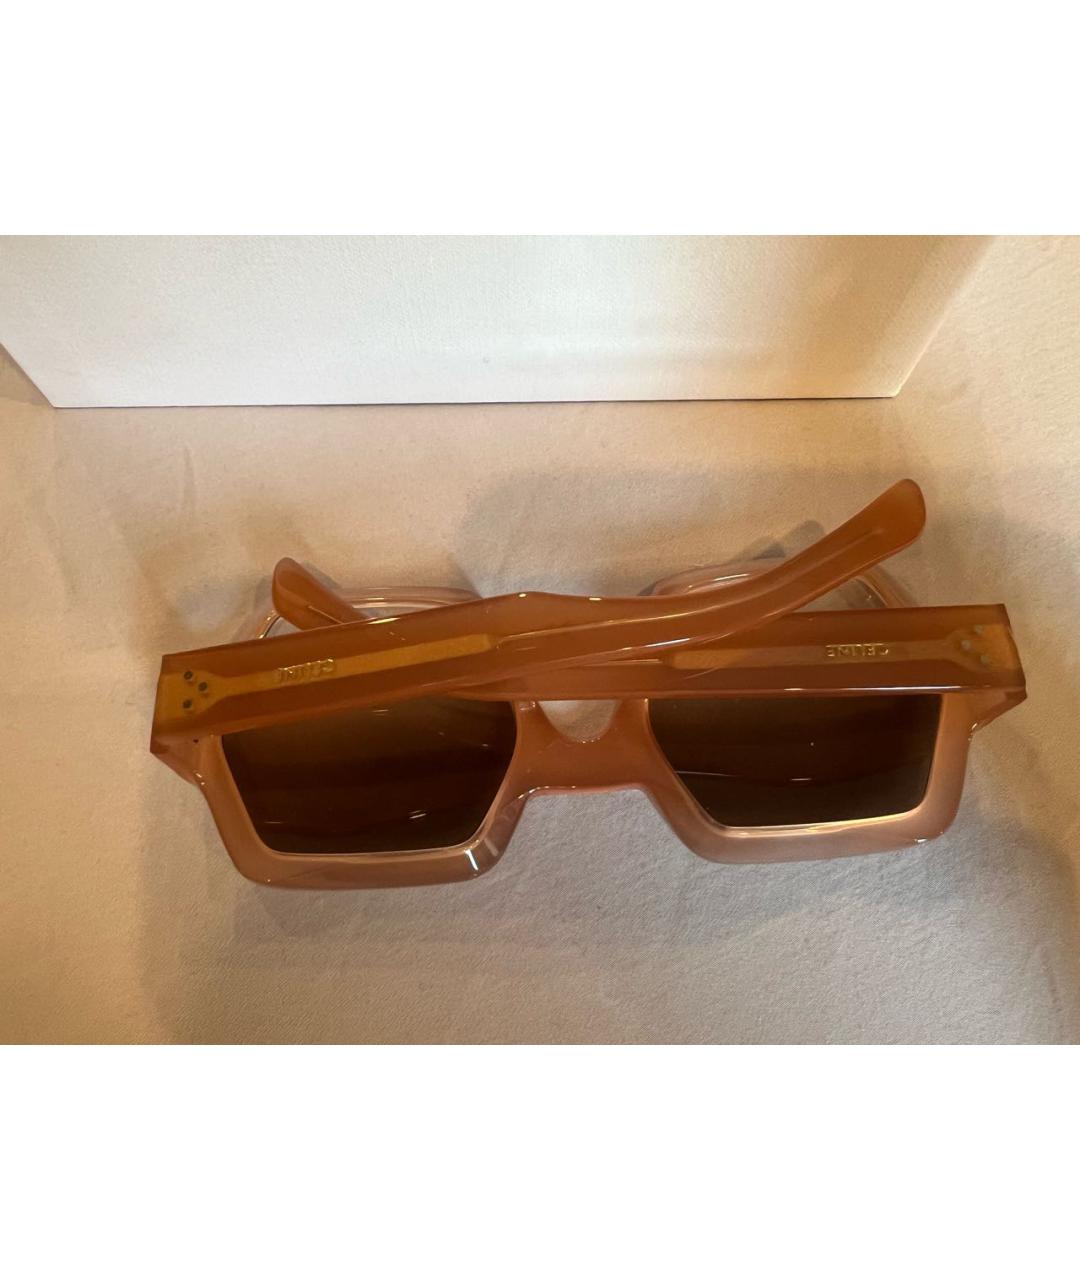 CELINE PRE-OWNED Бежевые пластиковые солнцезащитные очки, фото 2